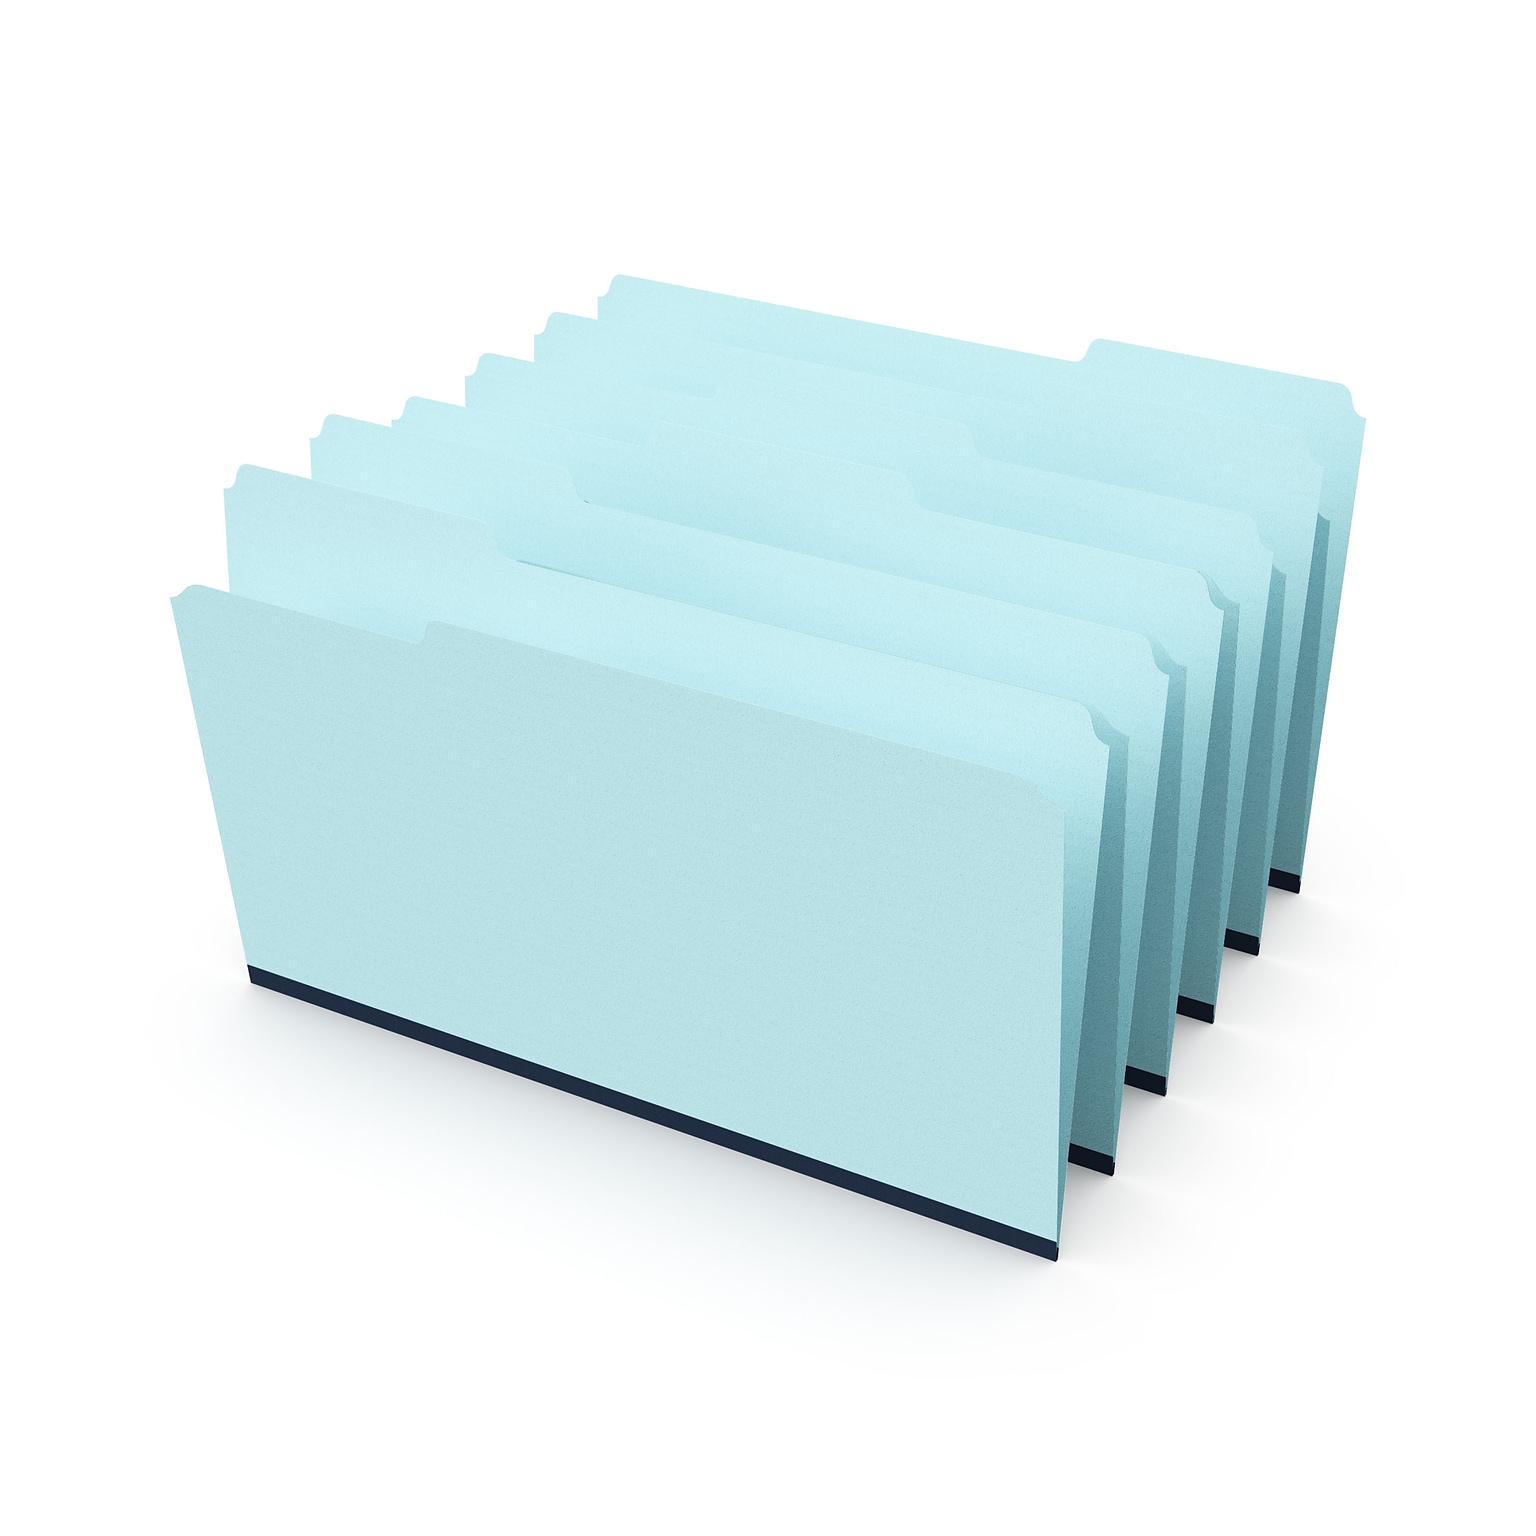 Staples 60% Recycled Heavyweight File Folders, 1/3-Cut Tab, Legal Size, Light Blue, 25/Box (ST621318)